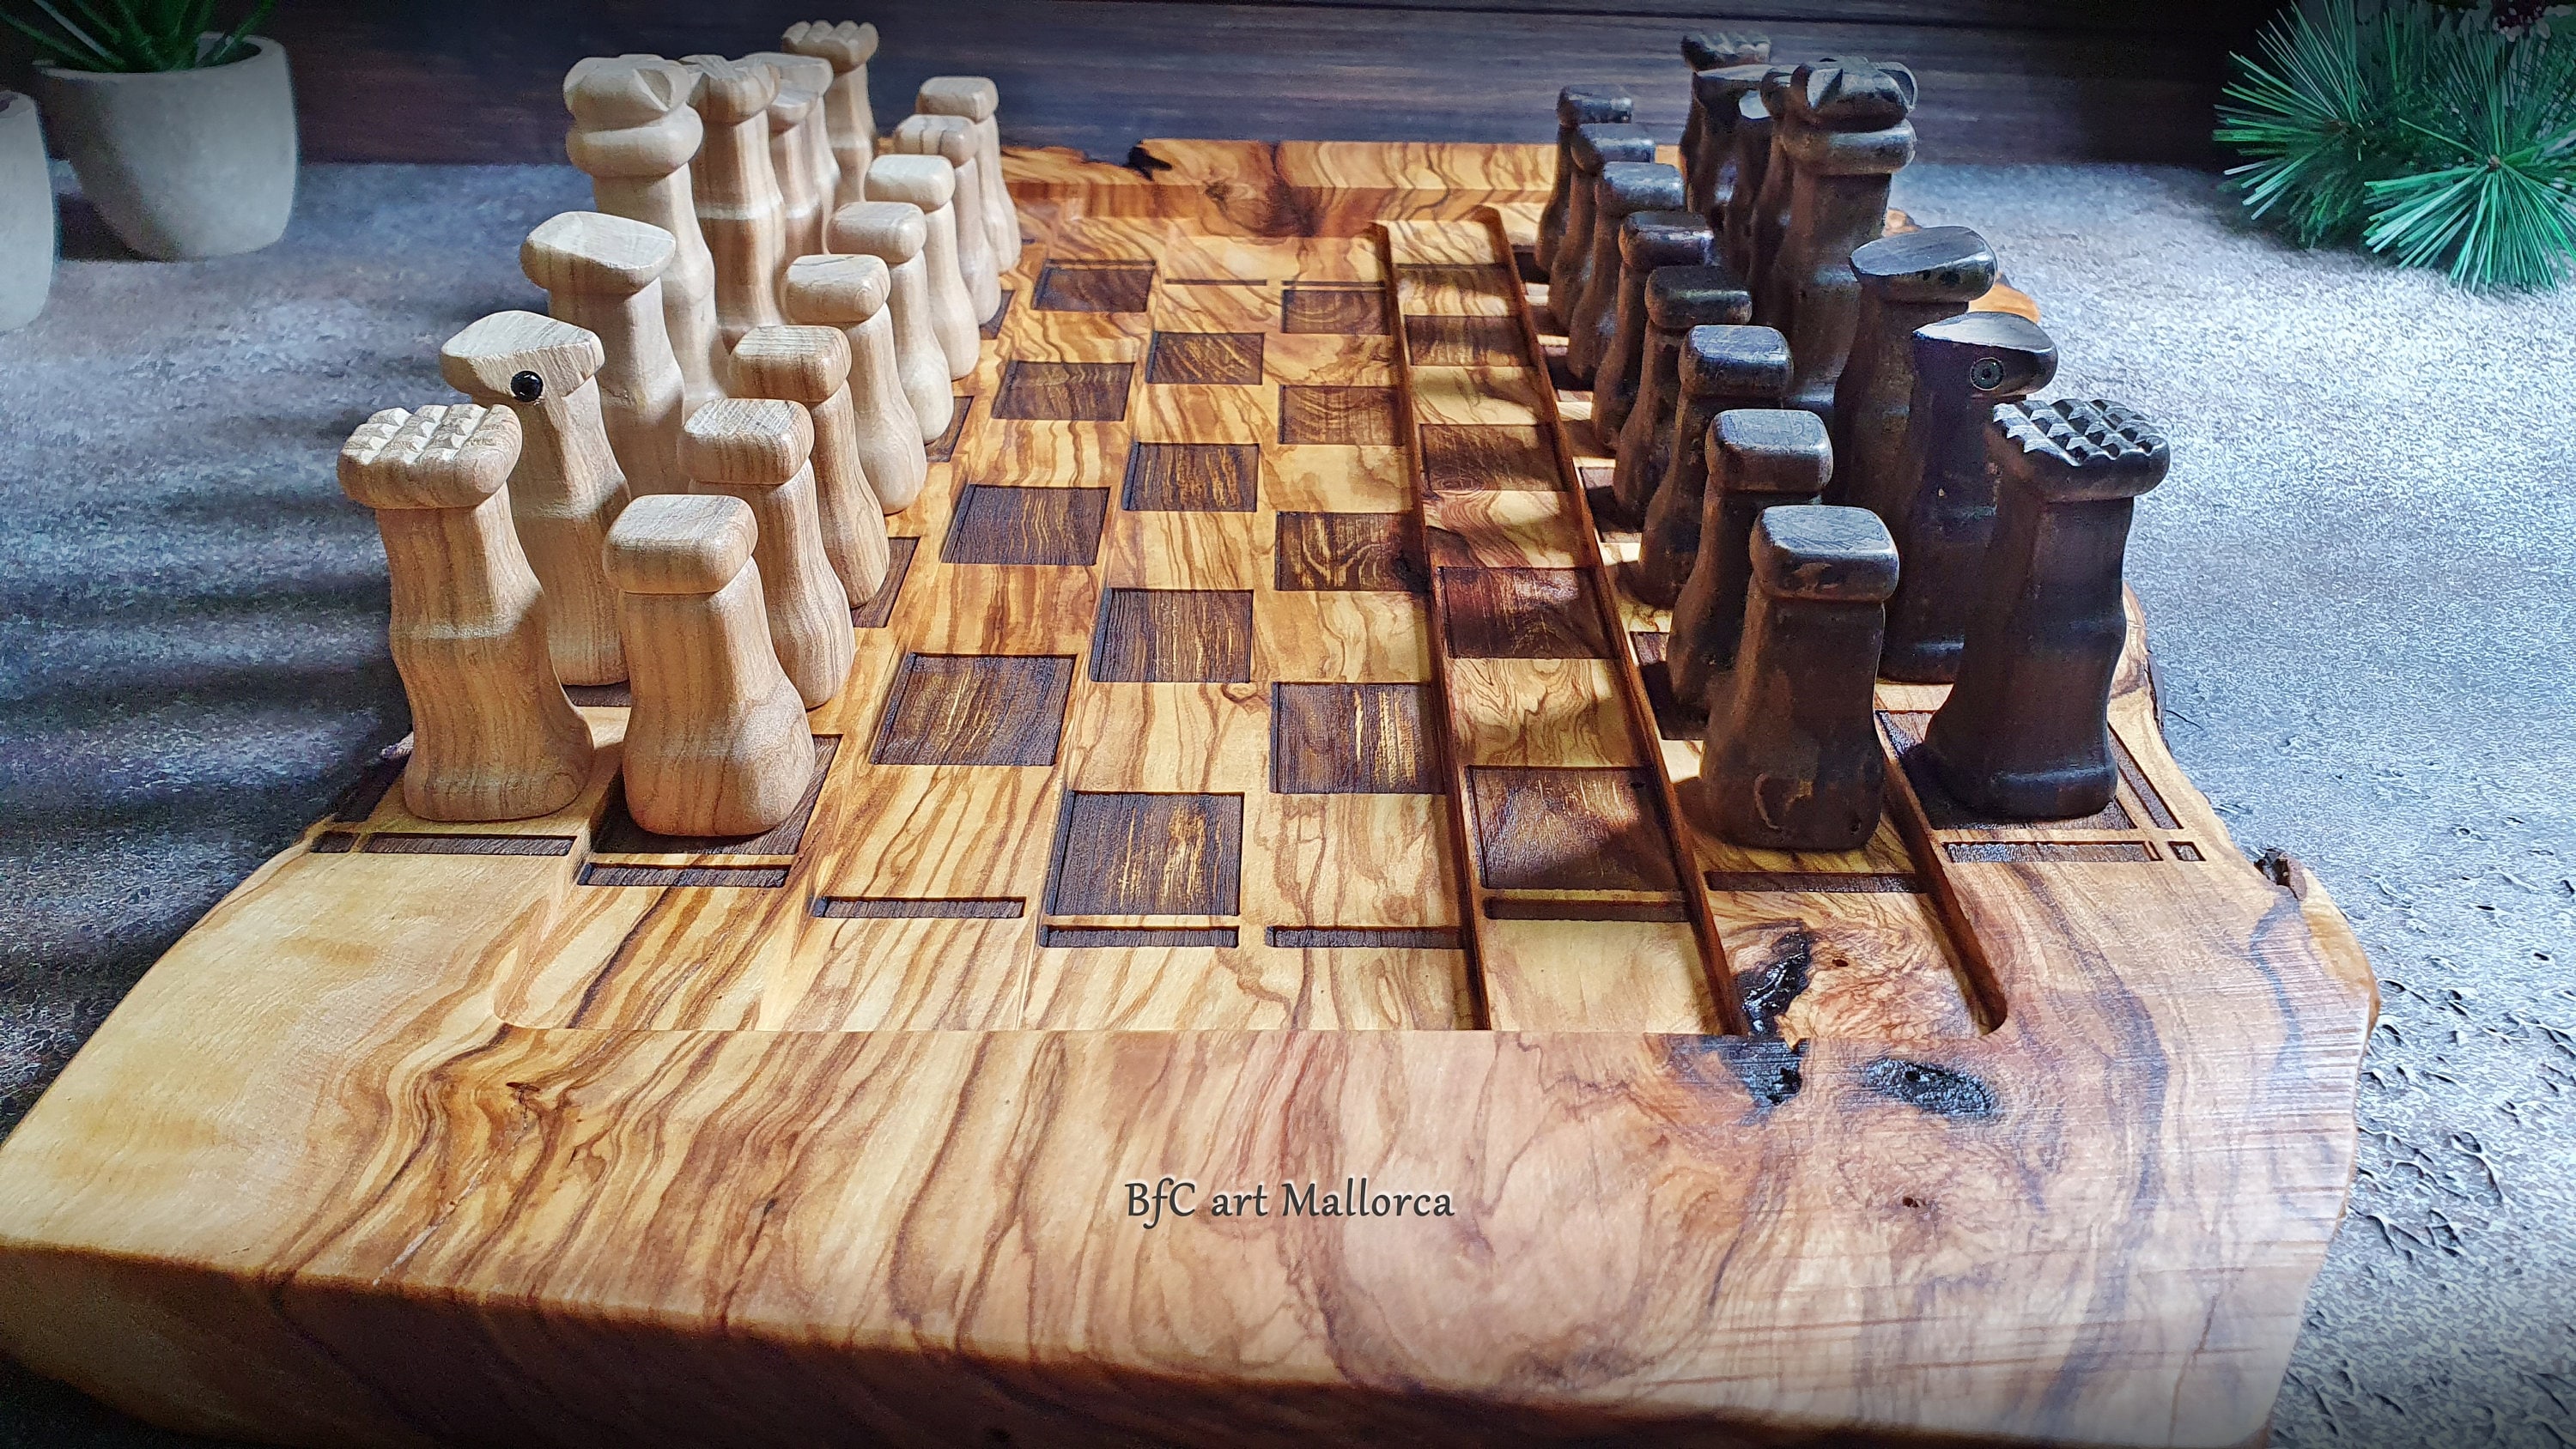 Custom Chanel inspired chess board - Slaylebrity